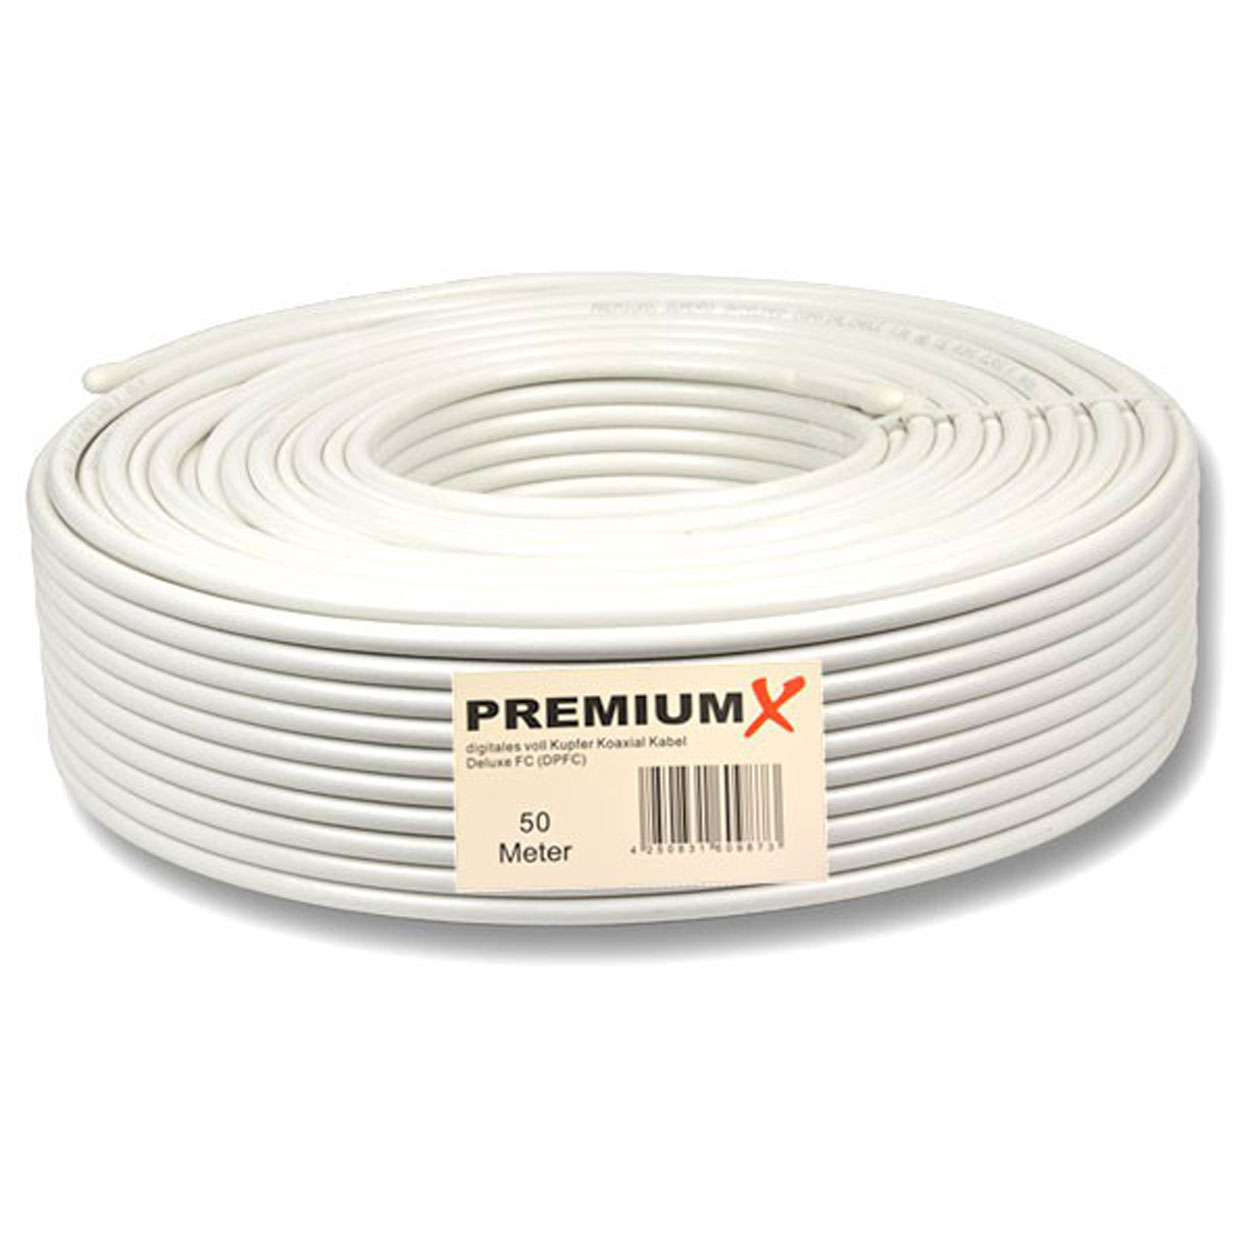 PREMIUMX 50m BASIC SAT 135dB Koaxial Gold-Line 5-Fach PRO geschirmt Antennenkabel Kabel Antennenkabel